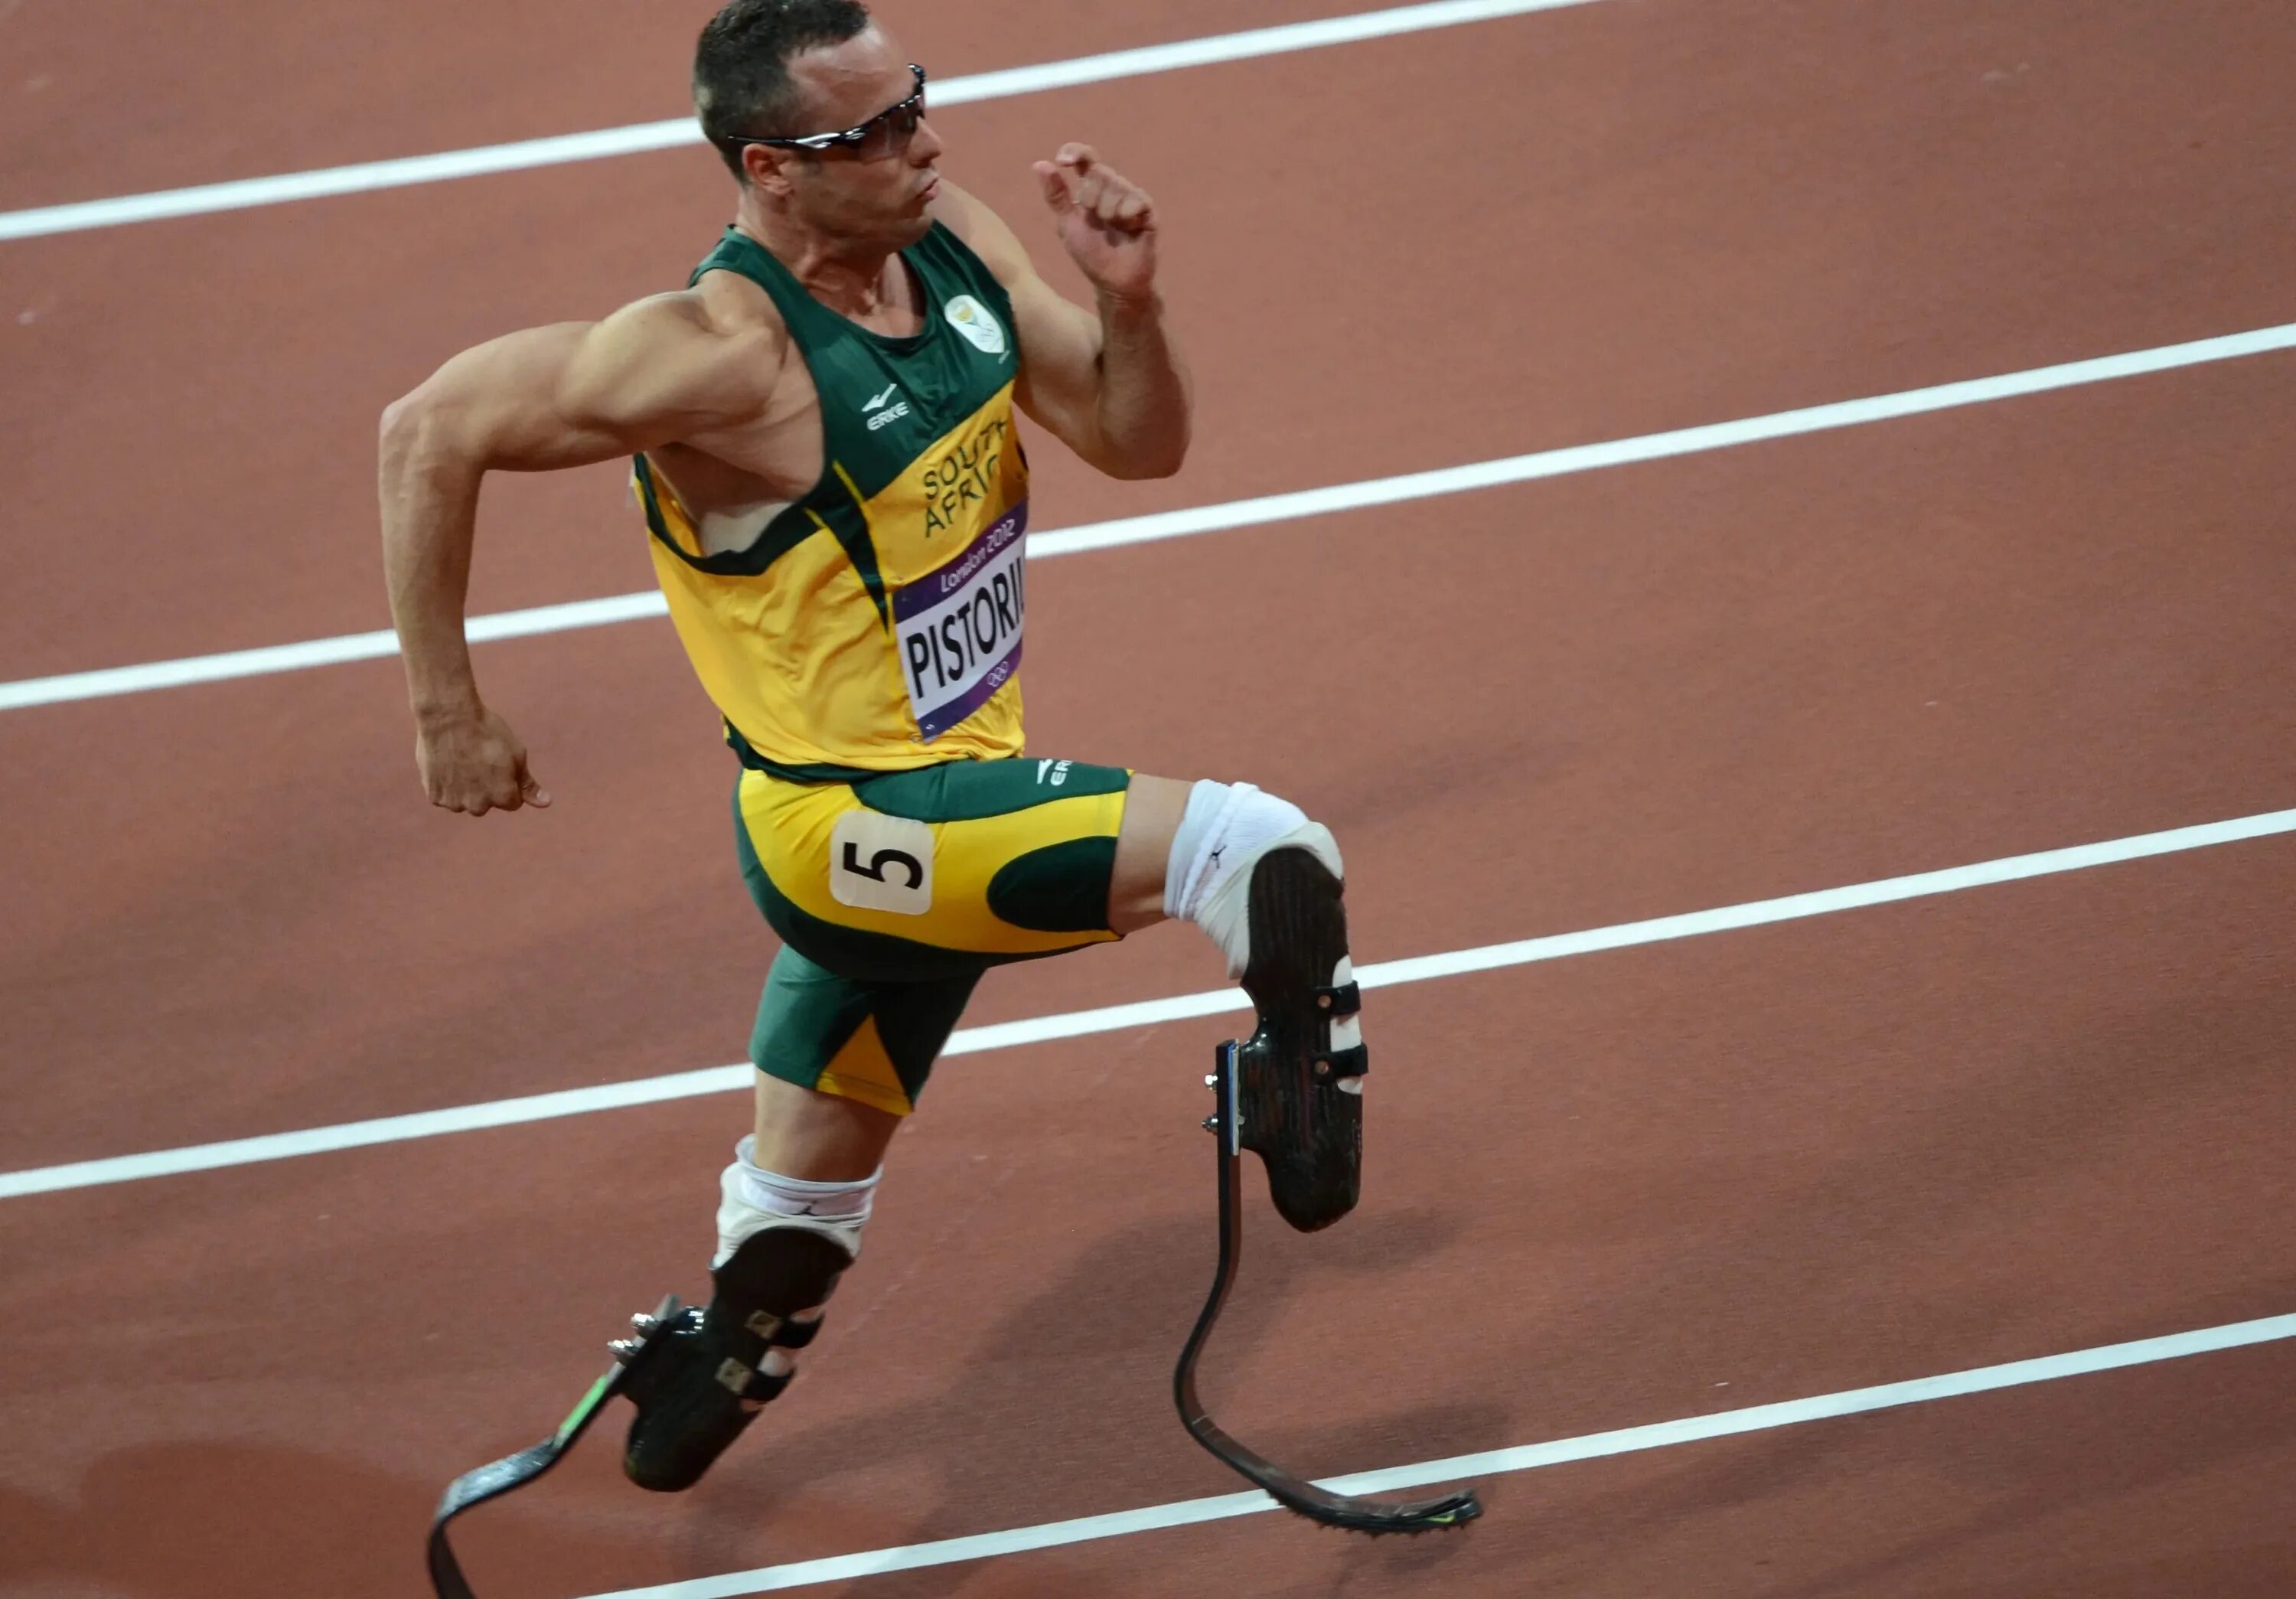 Истории спортсменов. Южноафриканский бегун Оскар Писториус. Бегун паралимпиец Оскар Писториус. Безногий бегун Оскар Писториус. Оскар Писториус южноафриканский Спринтер.